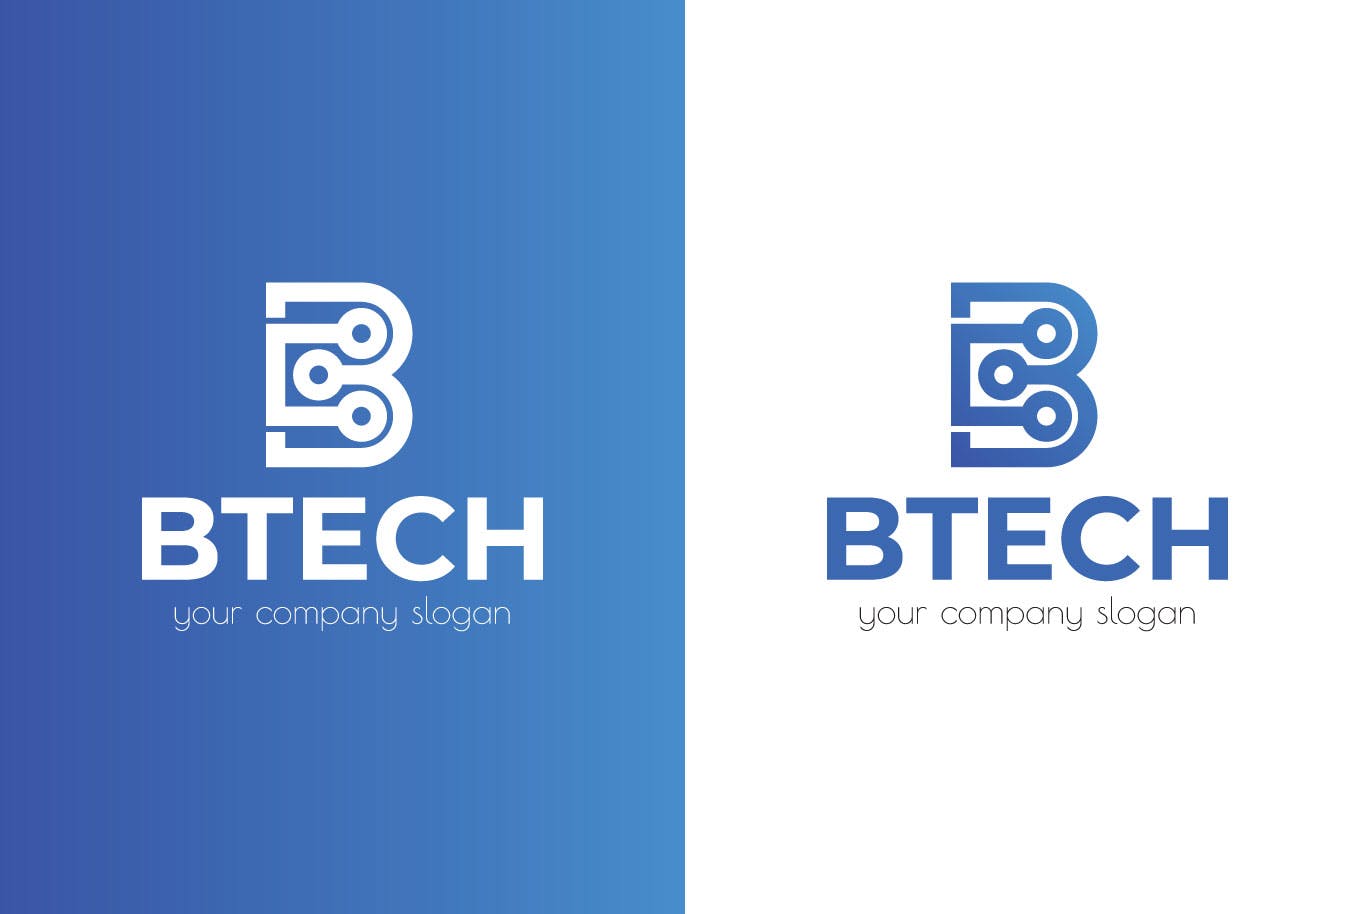 基于B字母图形的企业Logo设计素材库精选模板 Letter Based Business Logo Template插图(1)